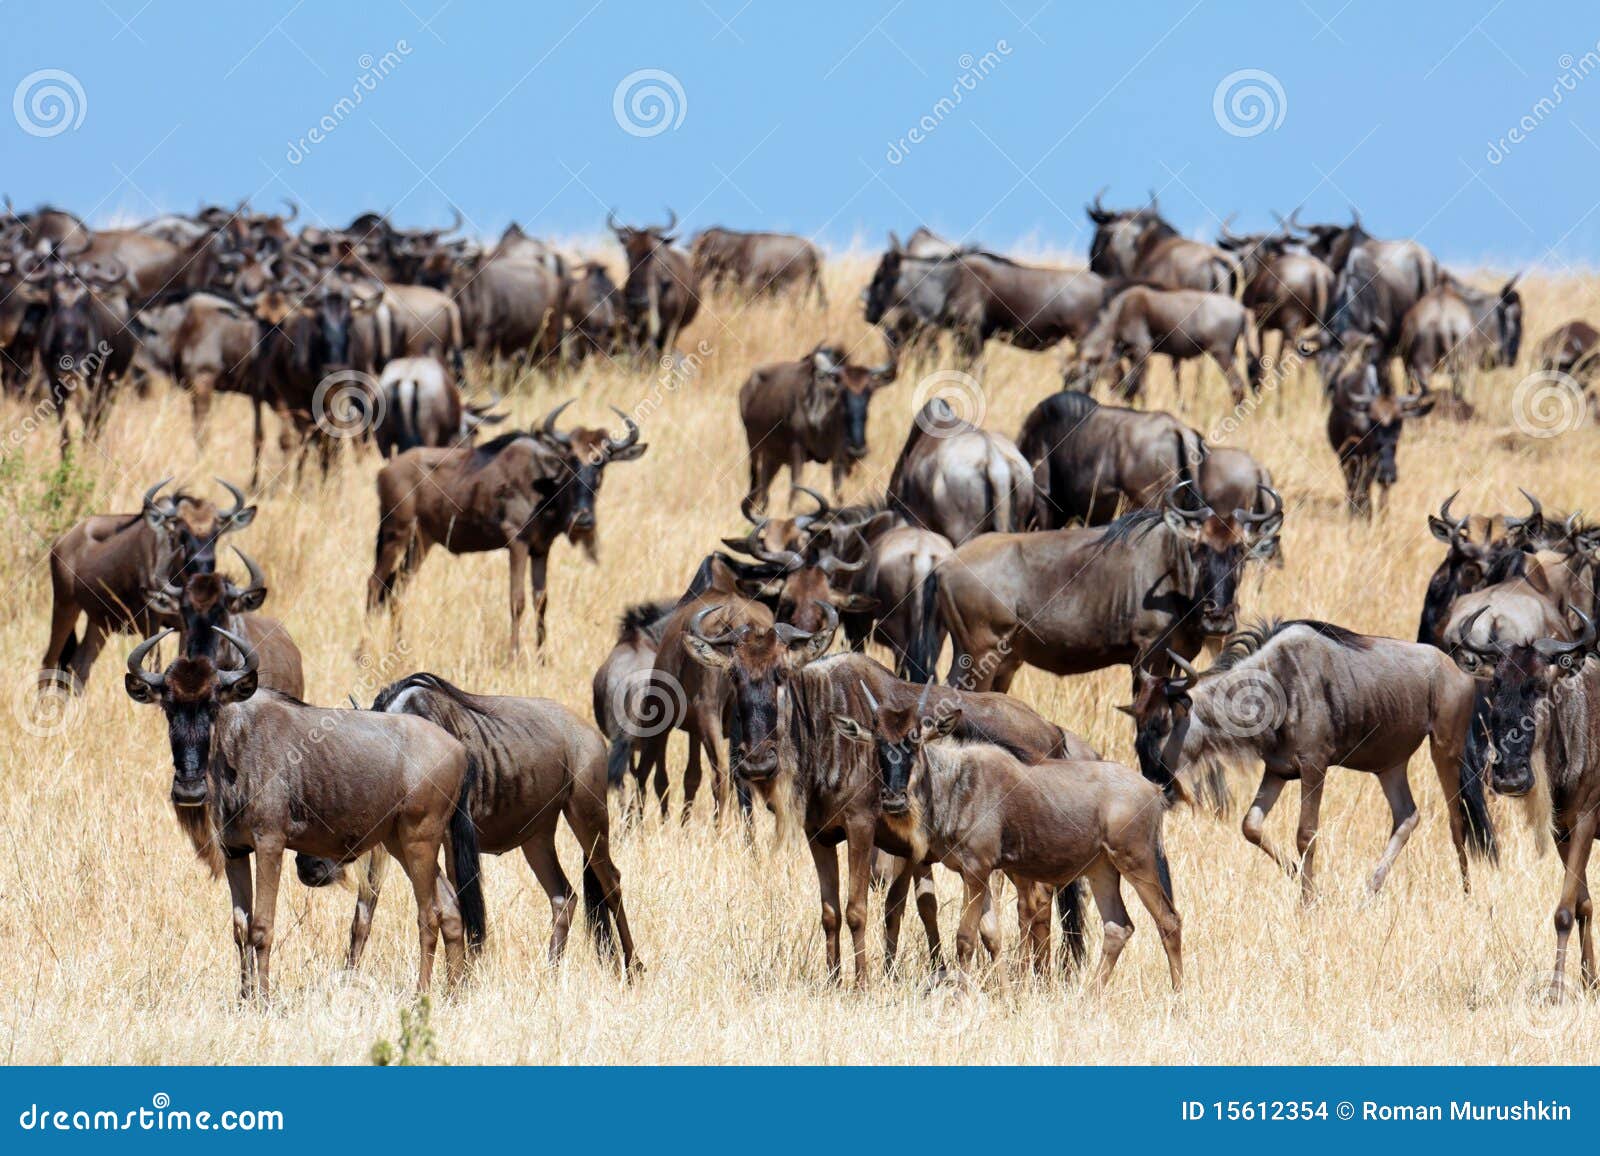 a herd of wildebeest migrate on the savannah